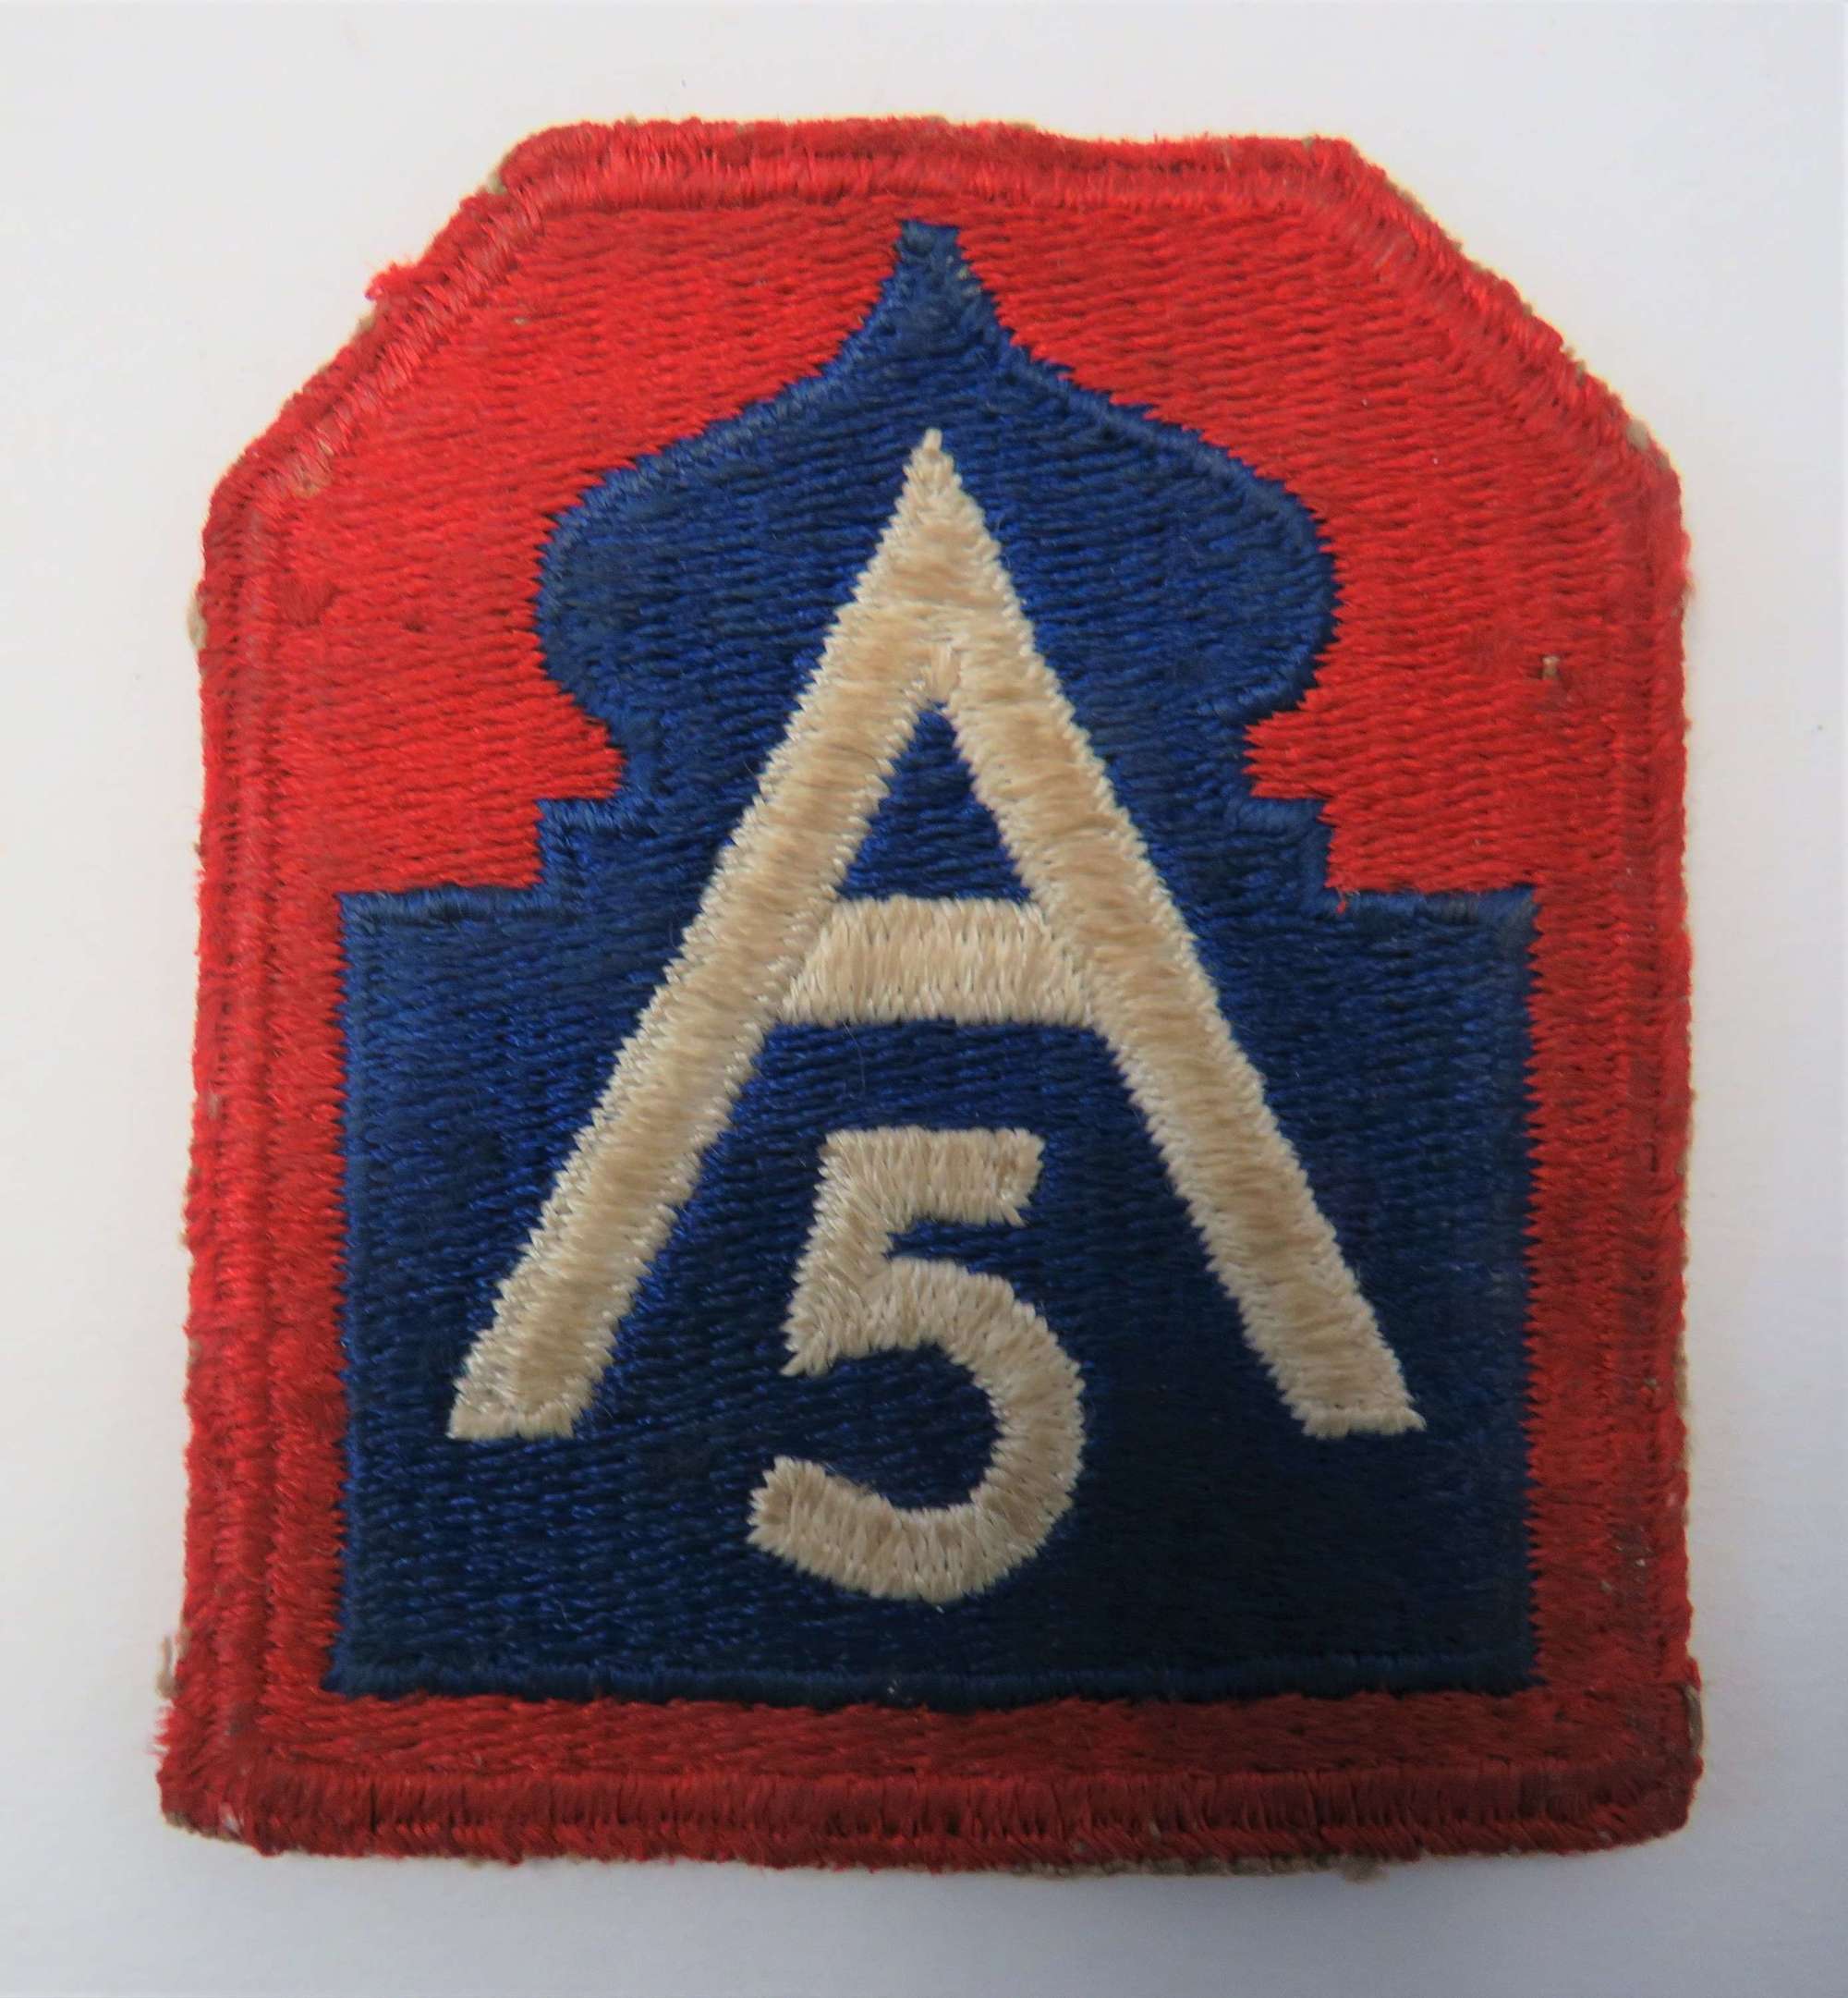 5th U.S Army Formation Badge